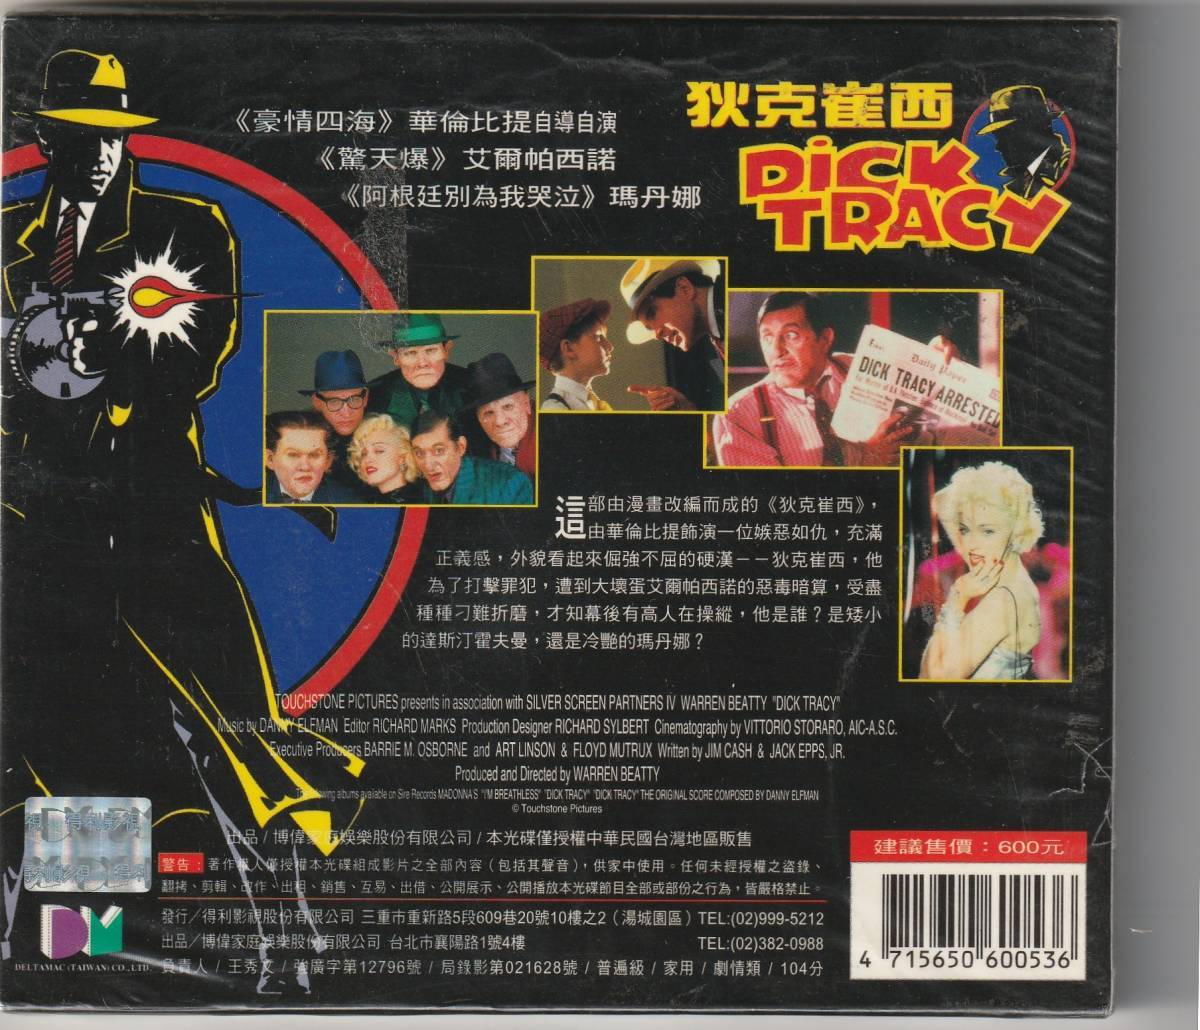  новый товар DICK TRACY Dick * Tracy Taiwan запись Picture диск запись VCD 2 листов комплект видео CD : Madonna MADONN